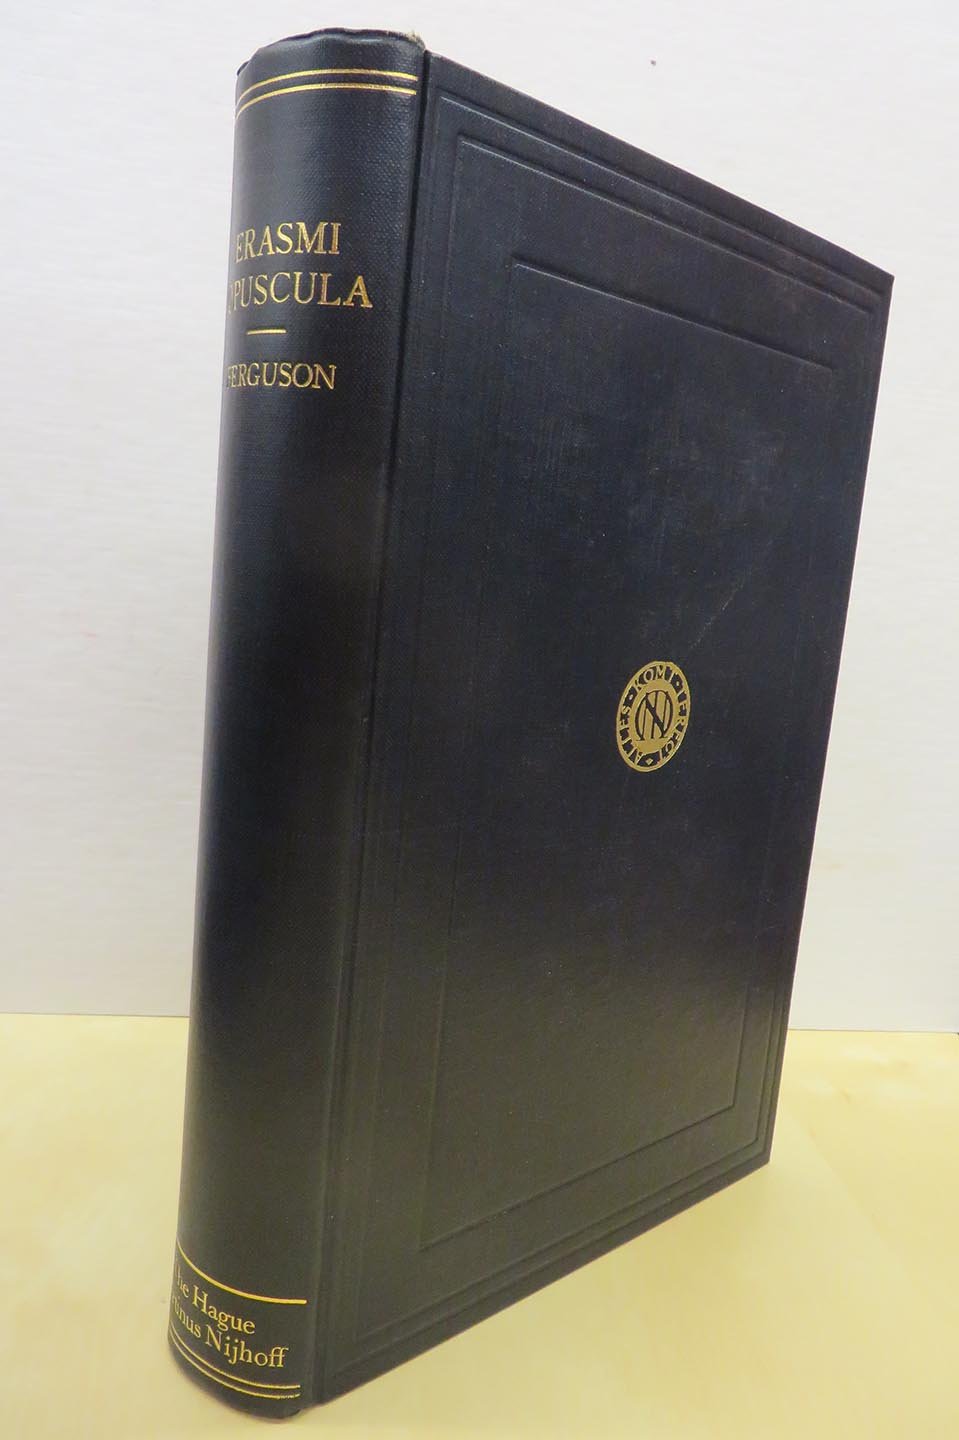 Erasmi Opuscula: A Supplement to the Opera Omnia